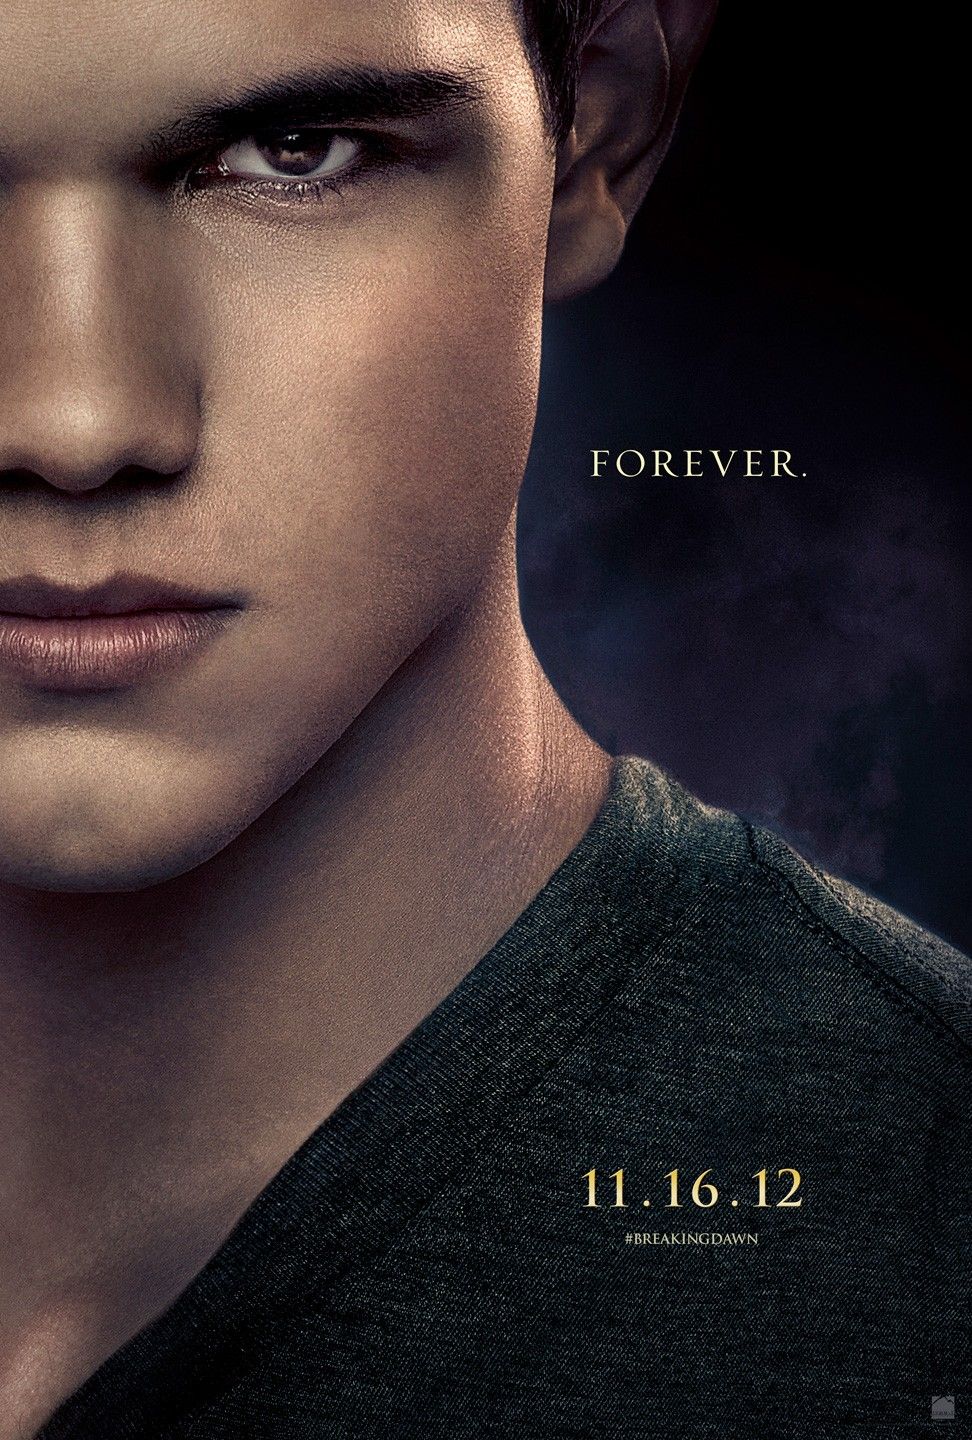 Twilight Poster 3